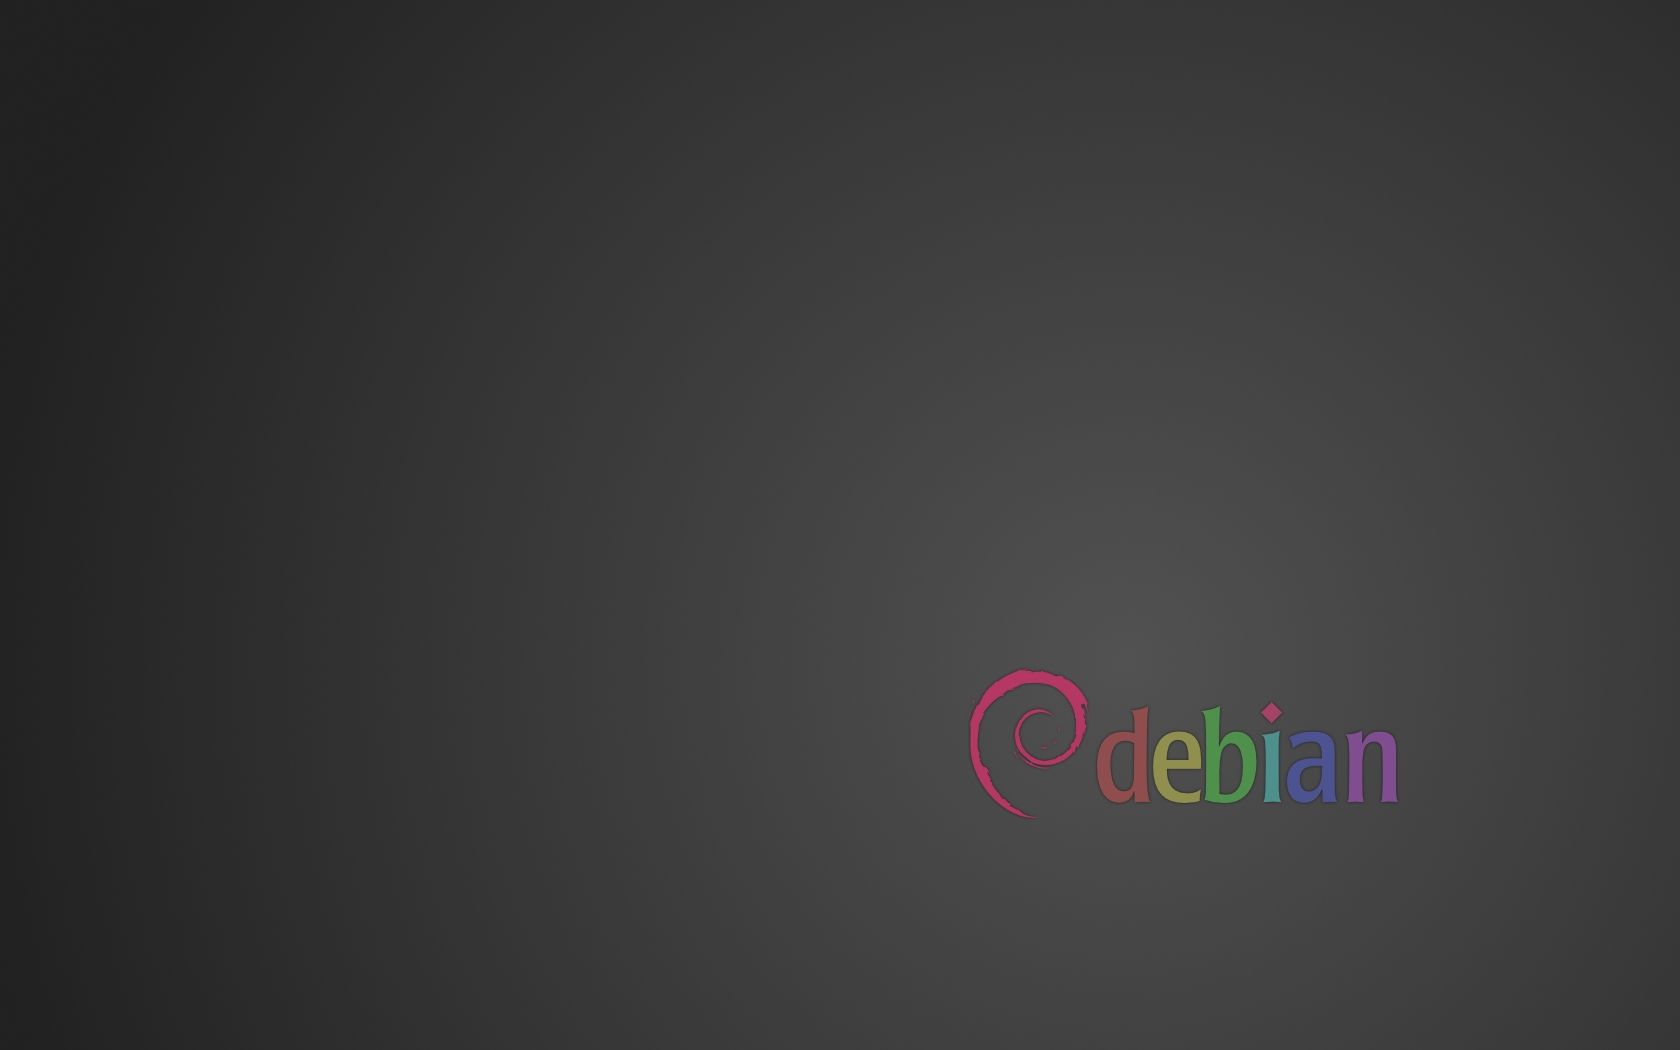 Debian Wallpaper | 1680x1050 | ID:23647